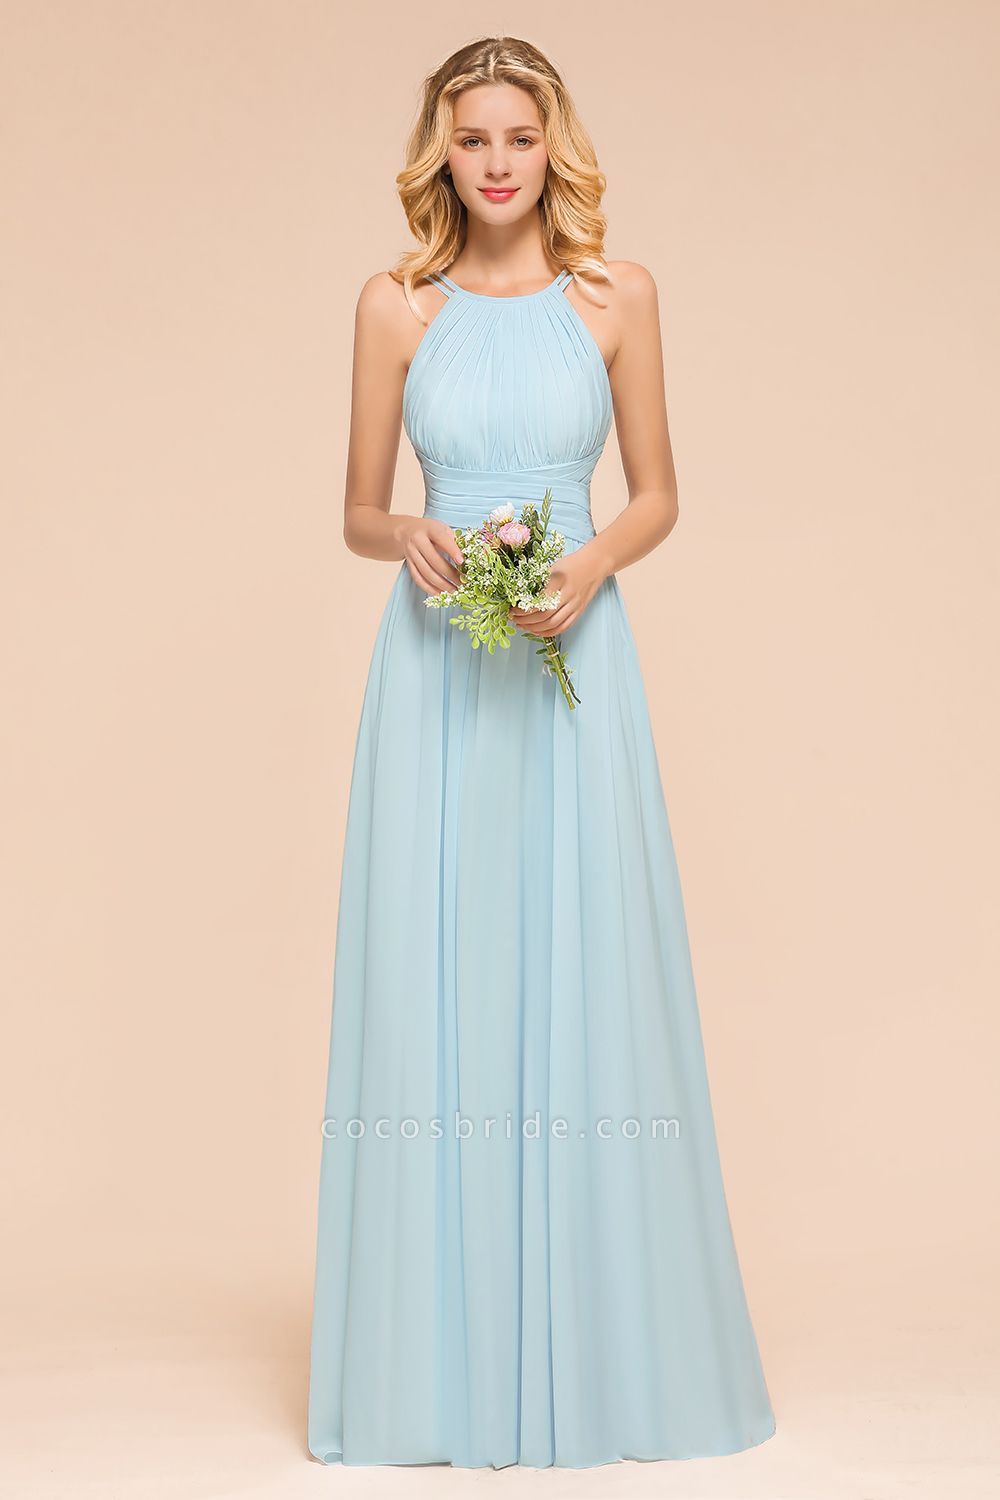 Gorgeous Long A-line Halter Chiffon Sky Blue Bridemaid Dress with Ruffle